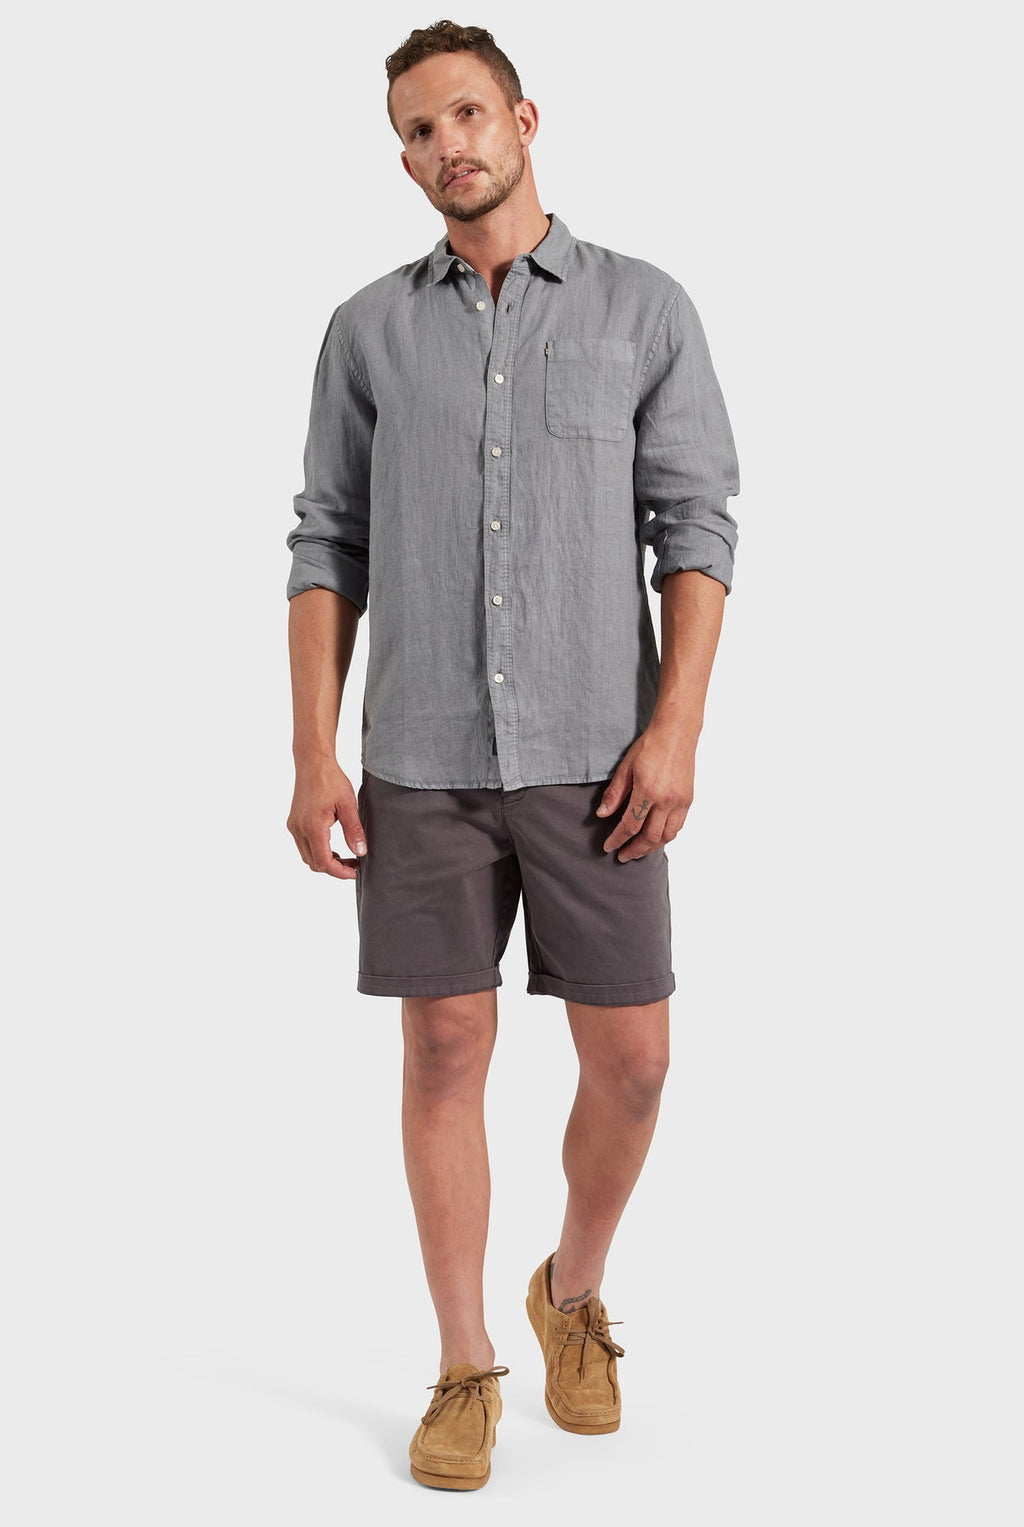 Academy Brand Hampton Linen Shirt - Gunsmoke Grey